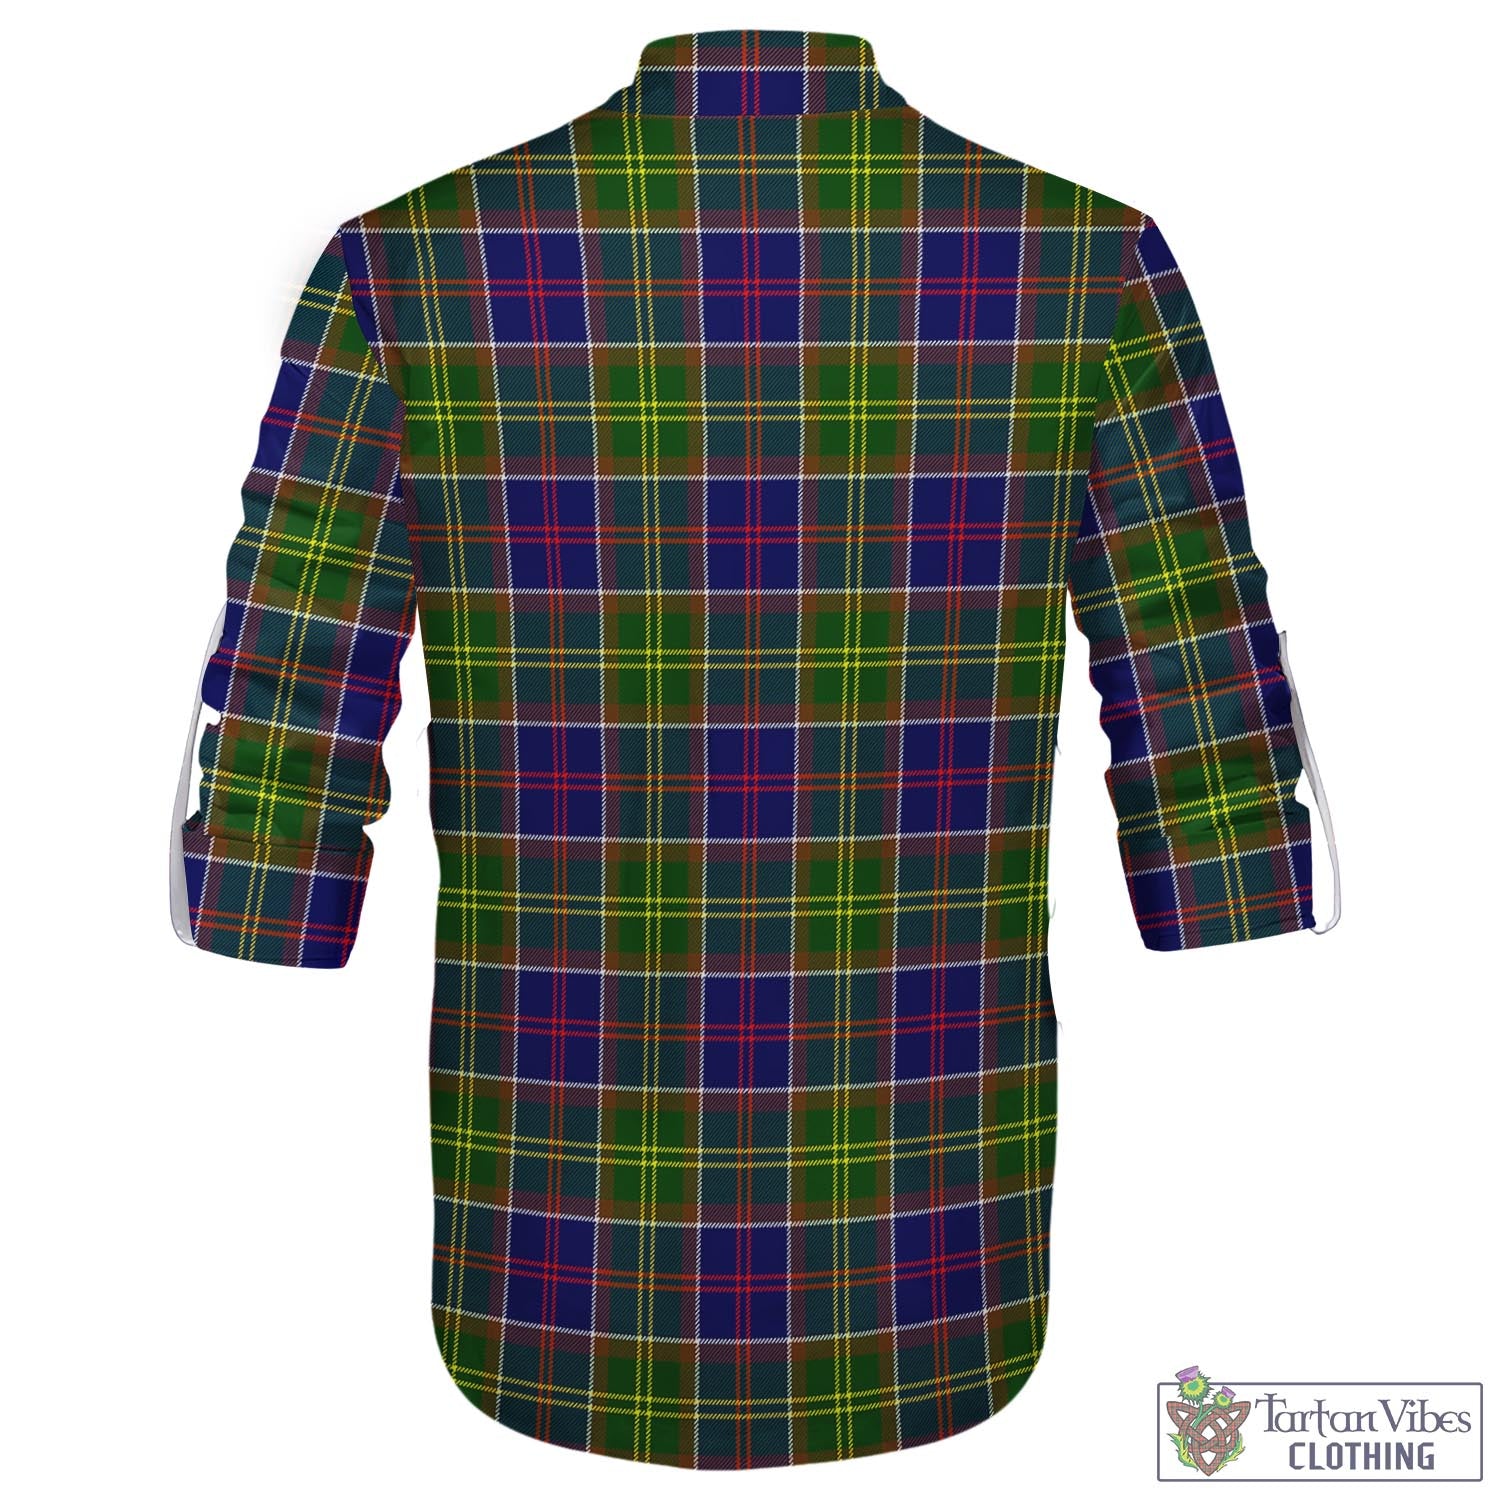 Tartan Vibes Clothing Dalrymple Tartan Men's Scottish Traditional Jacobite Ghillie Kilt Shirt